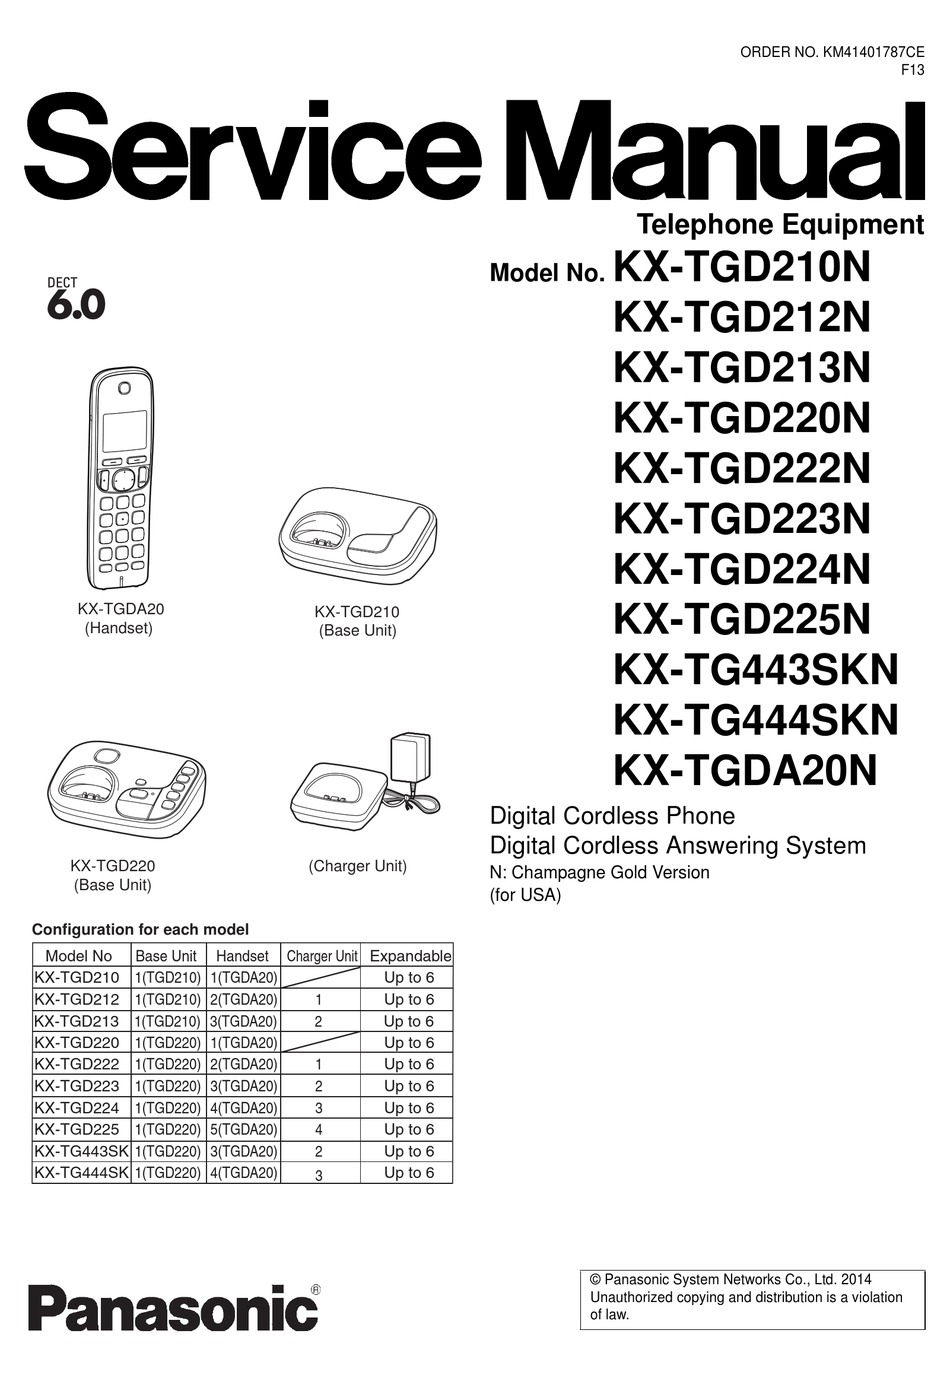 Panasonic KX-TGDA20n  MAIN BASE  KX-TGD220N KX-TGD213N 